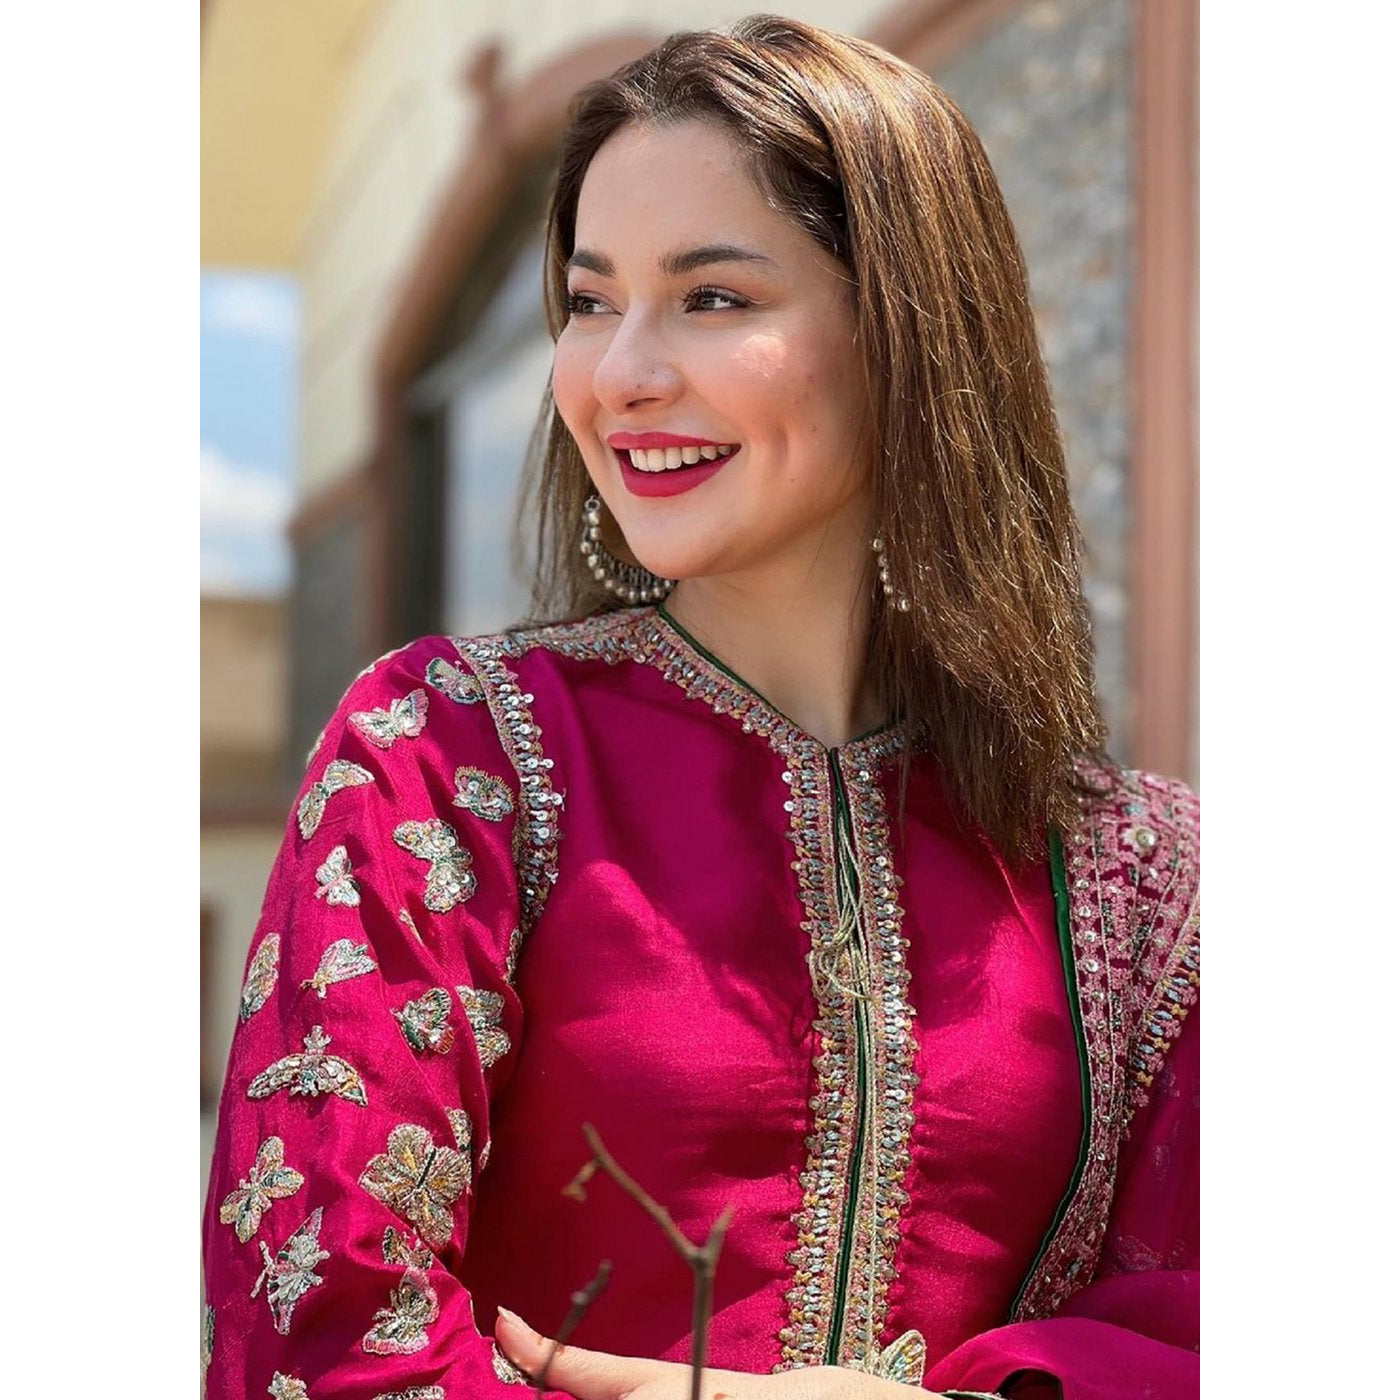 Hania Amir Unique dresses || Pakistani actresses || Party wear dress designs  || Hania Amir💚 - YouTube